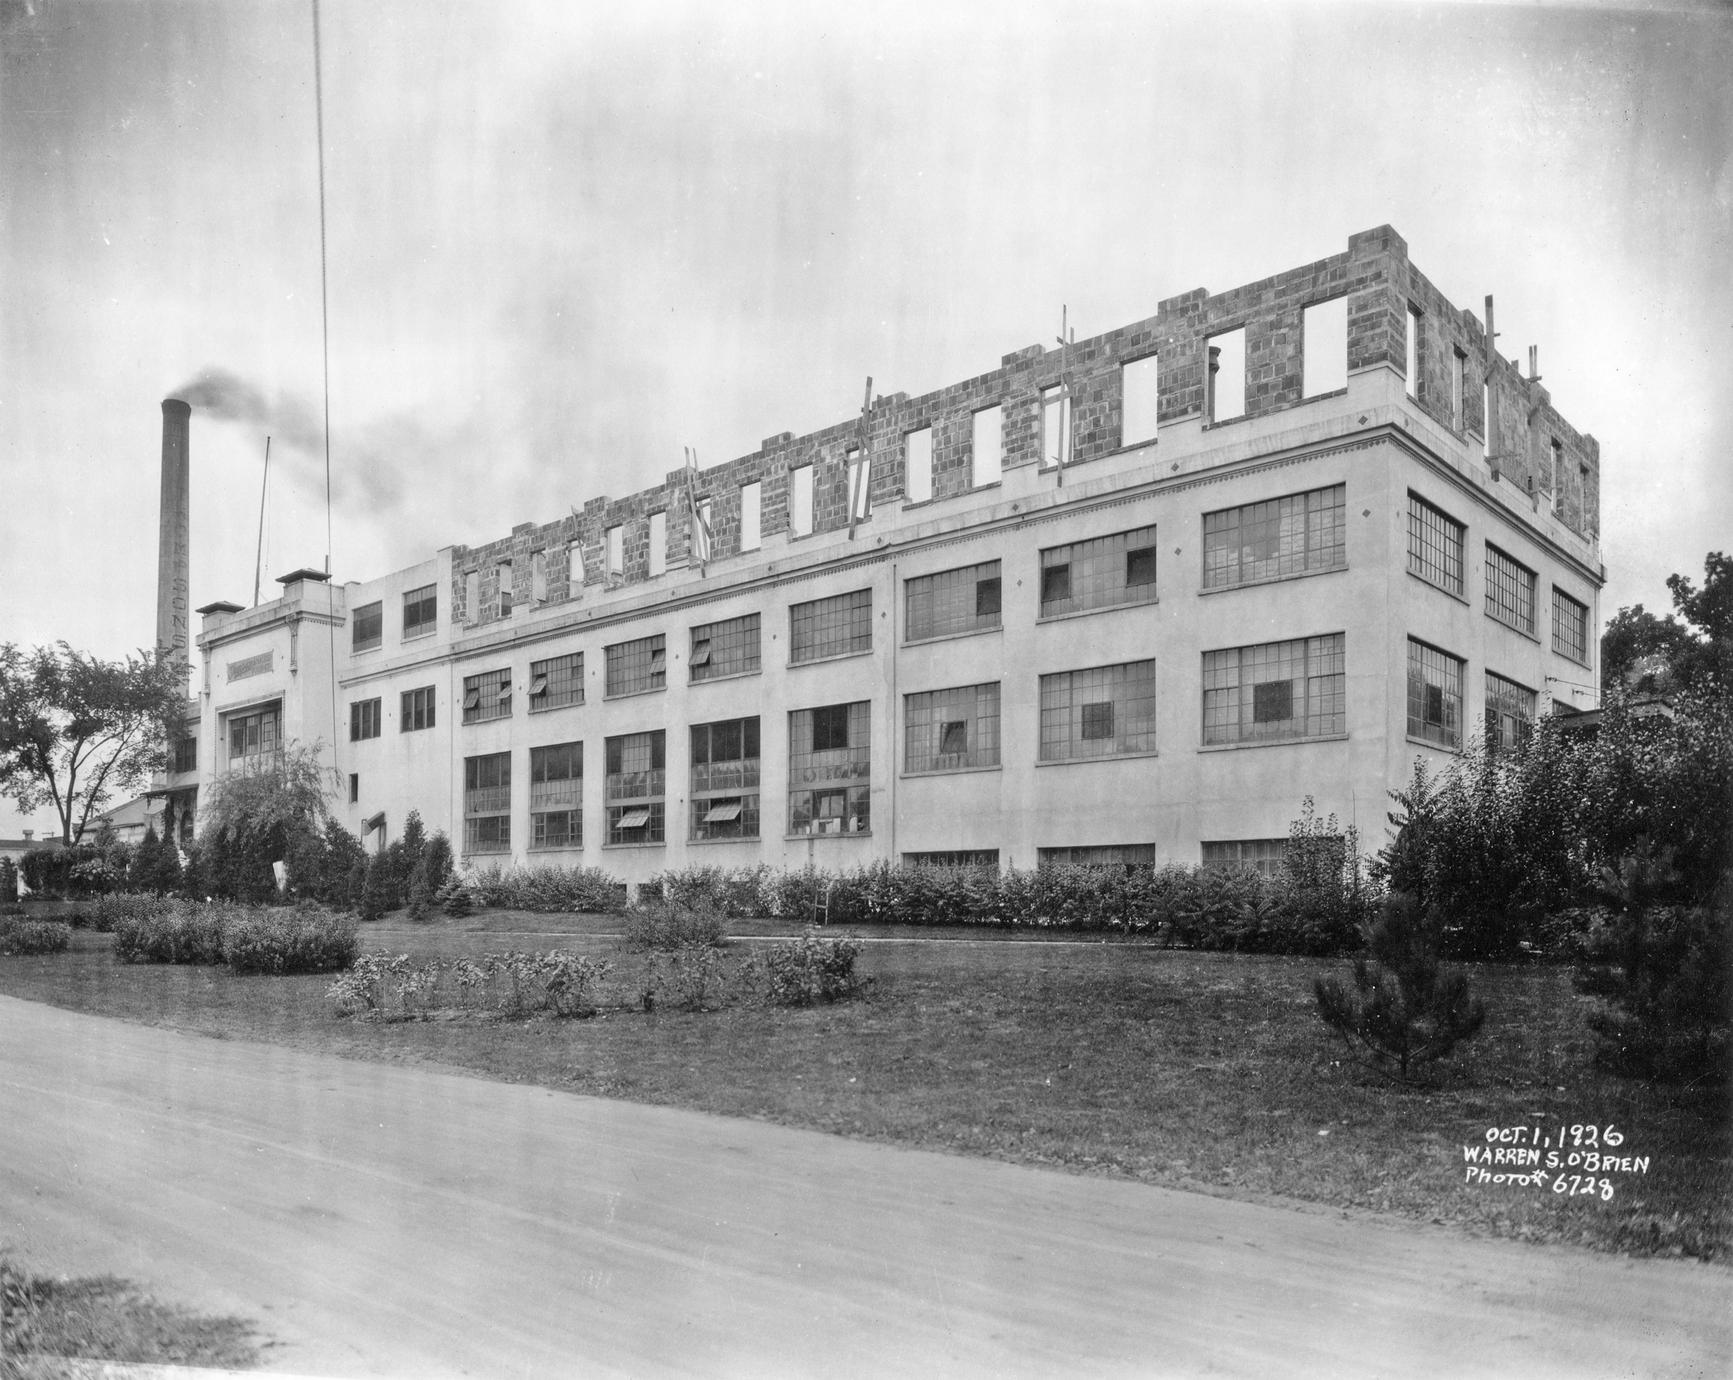 Thompson's Malted Food Company, Waukesha, third story construction